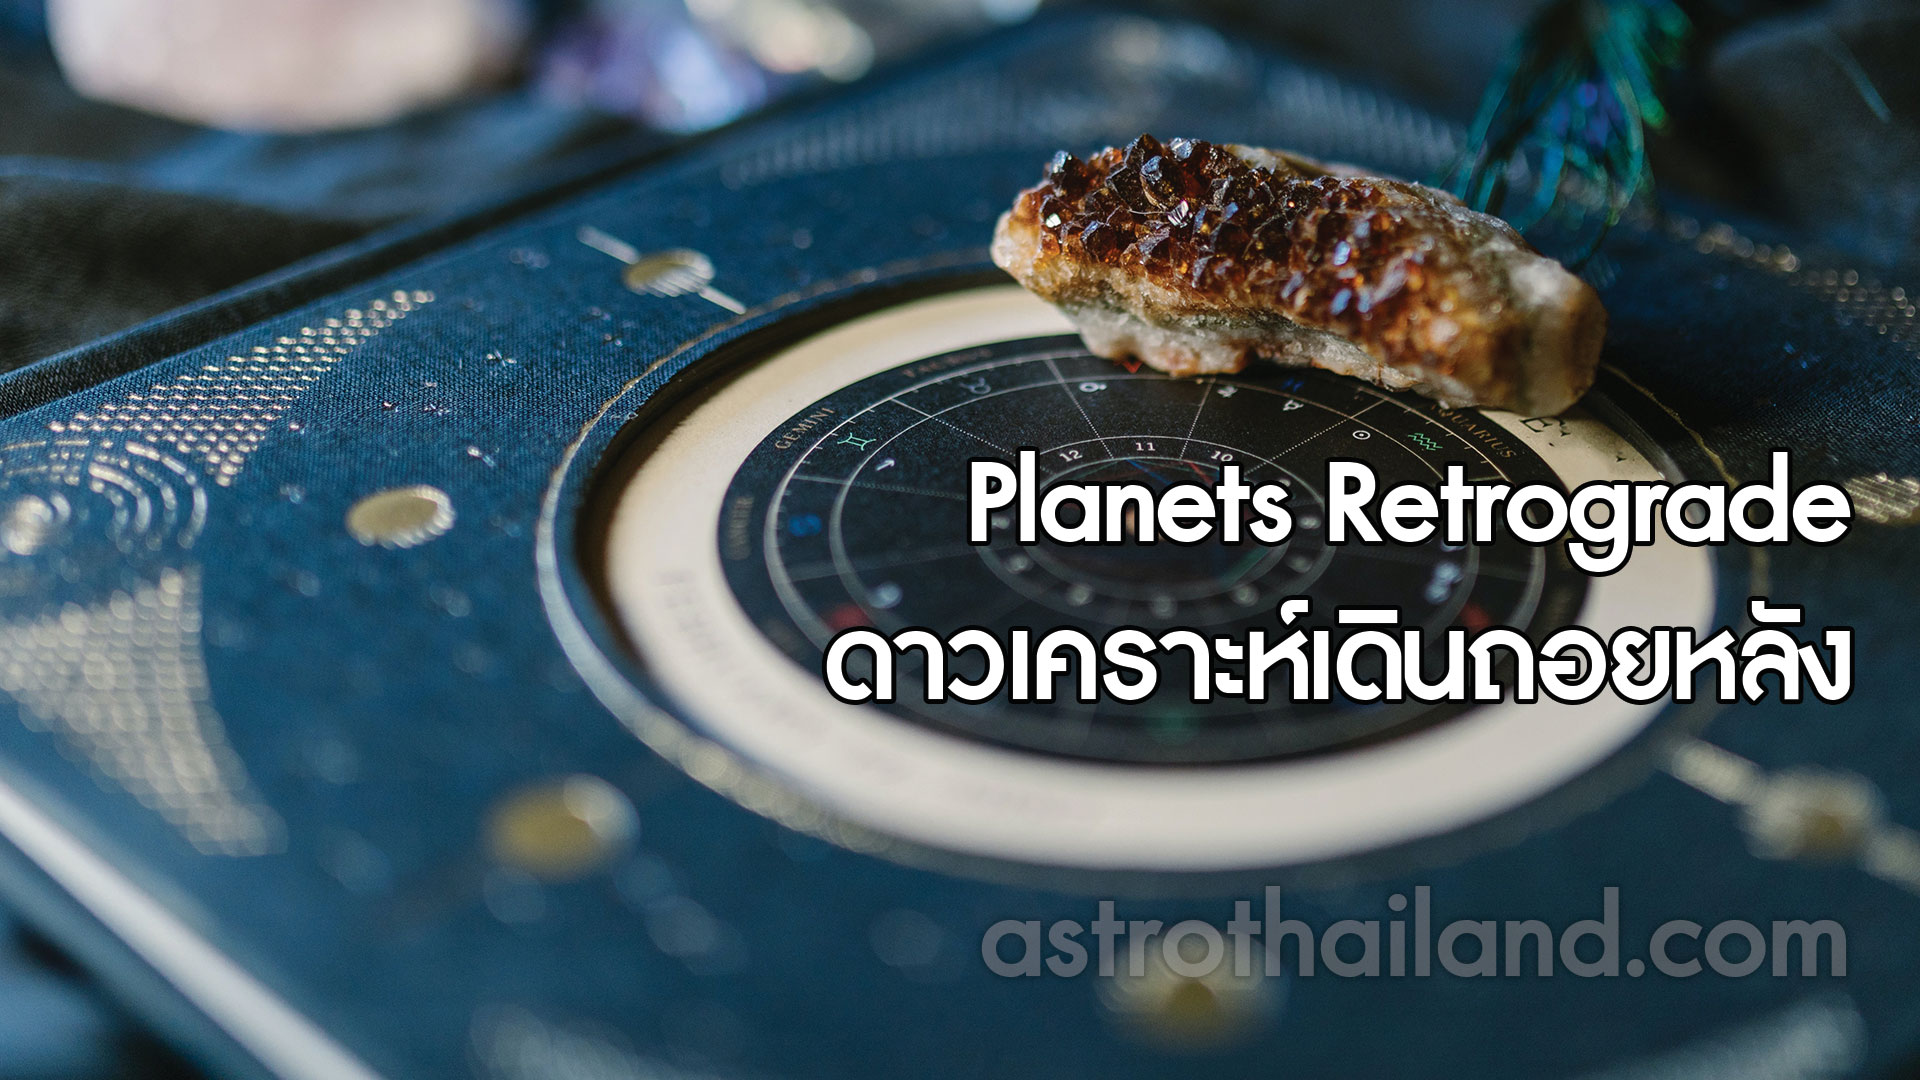 astrothailand ASTROLOGY room planets retrograde